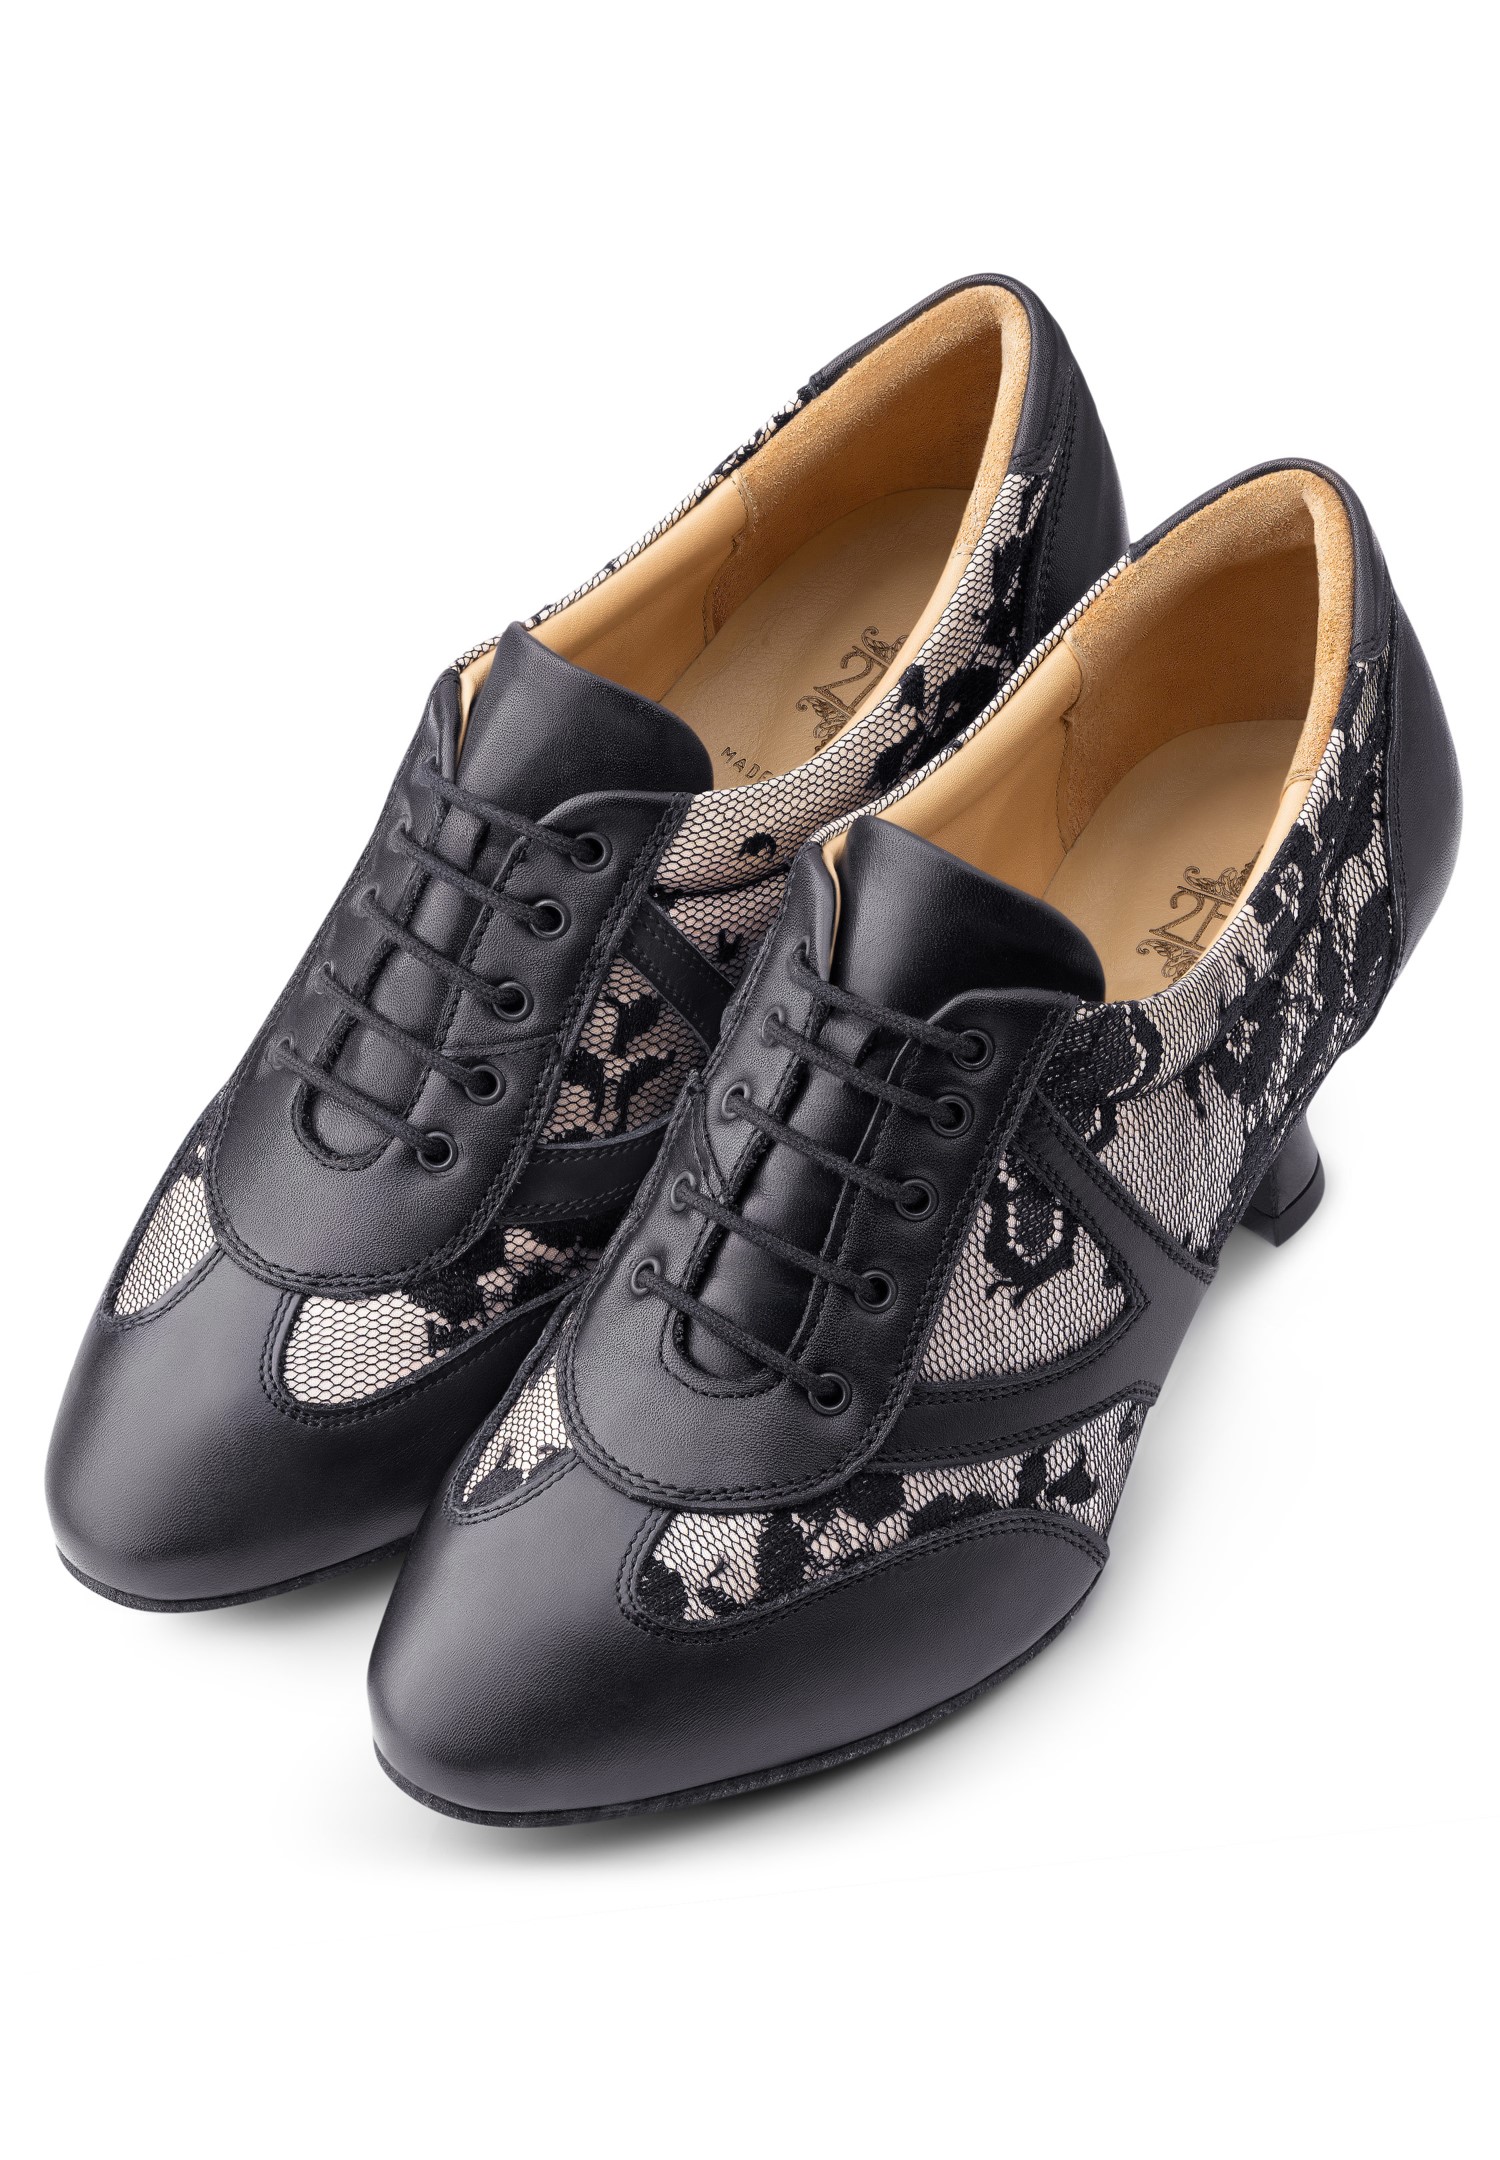 Louis Vuitton Grey Metallic Suede Oxford Ballet Flats Size 8/38.5